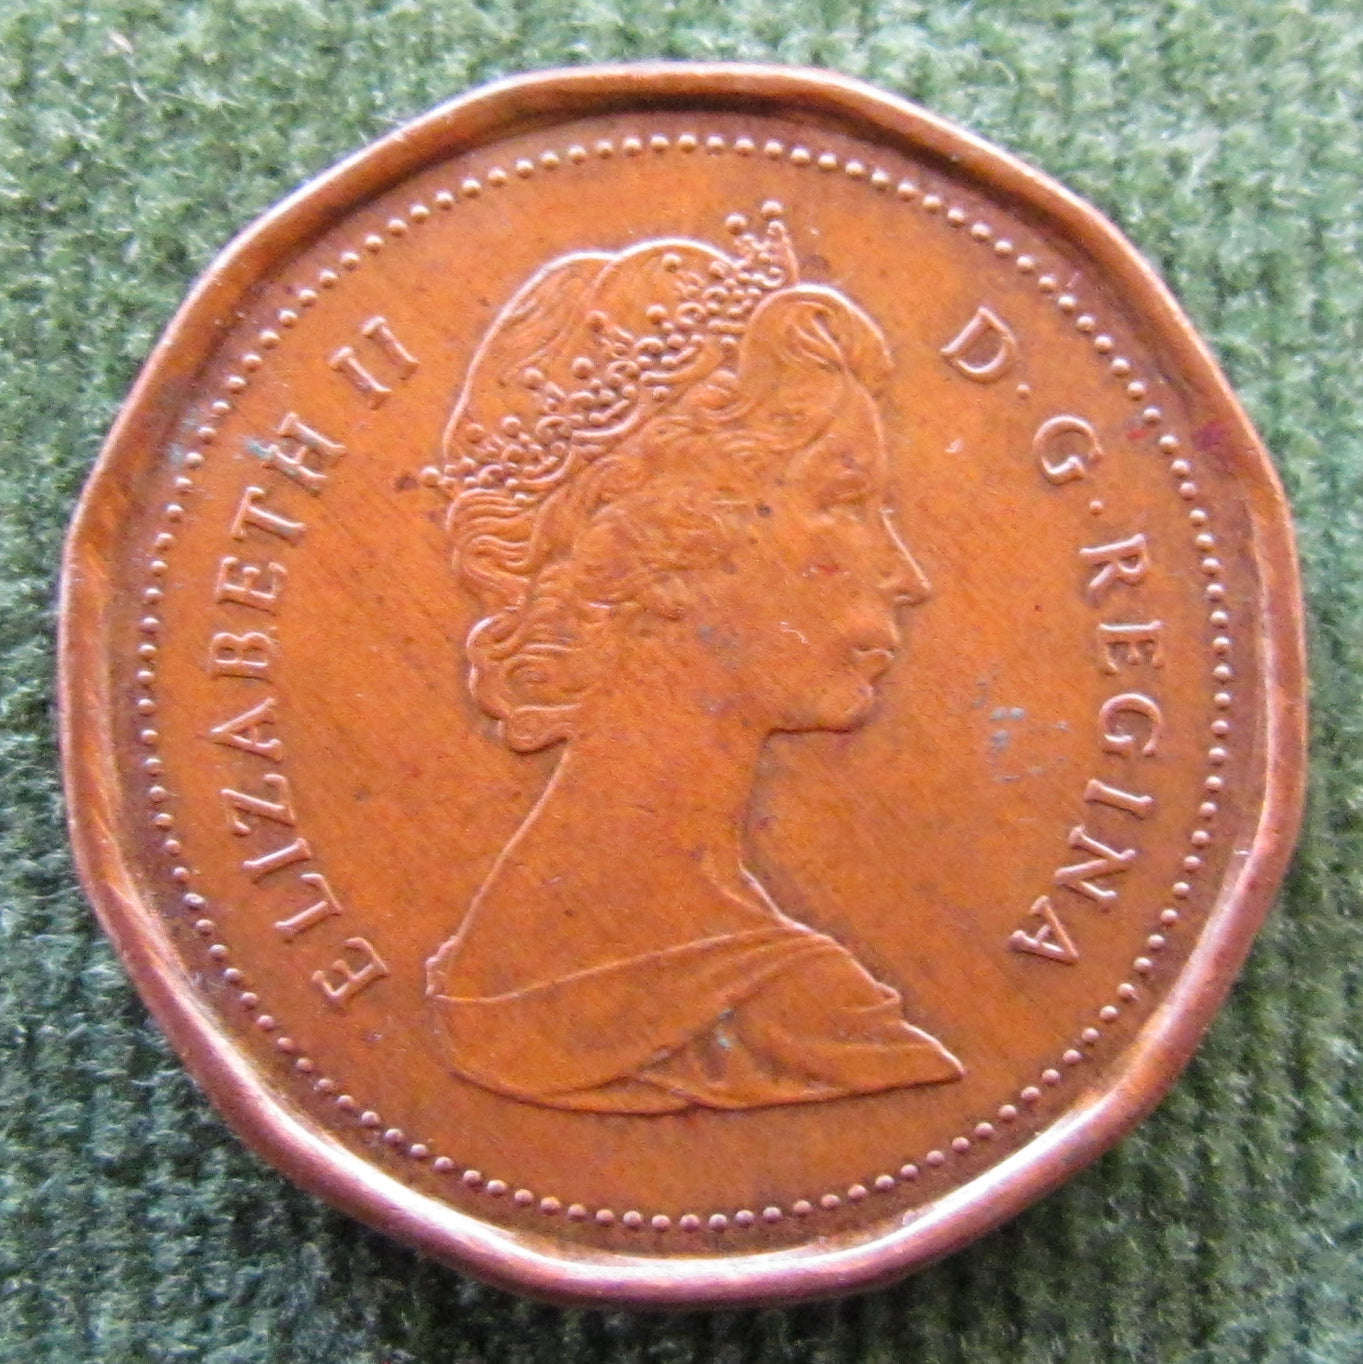 Canada 1989 1 Cent Queen Elizabeth II Coin - Circulated